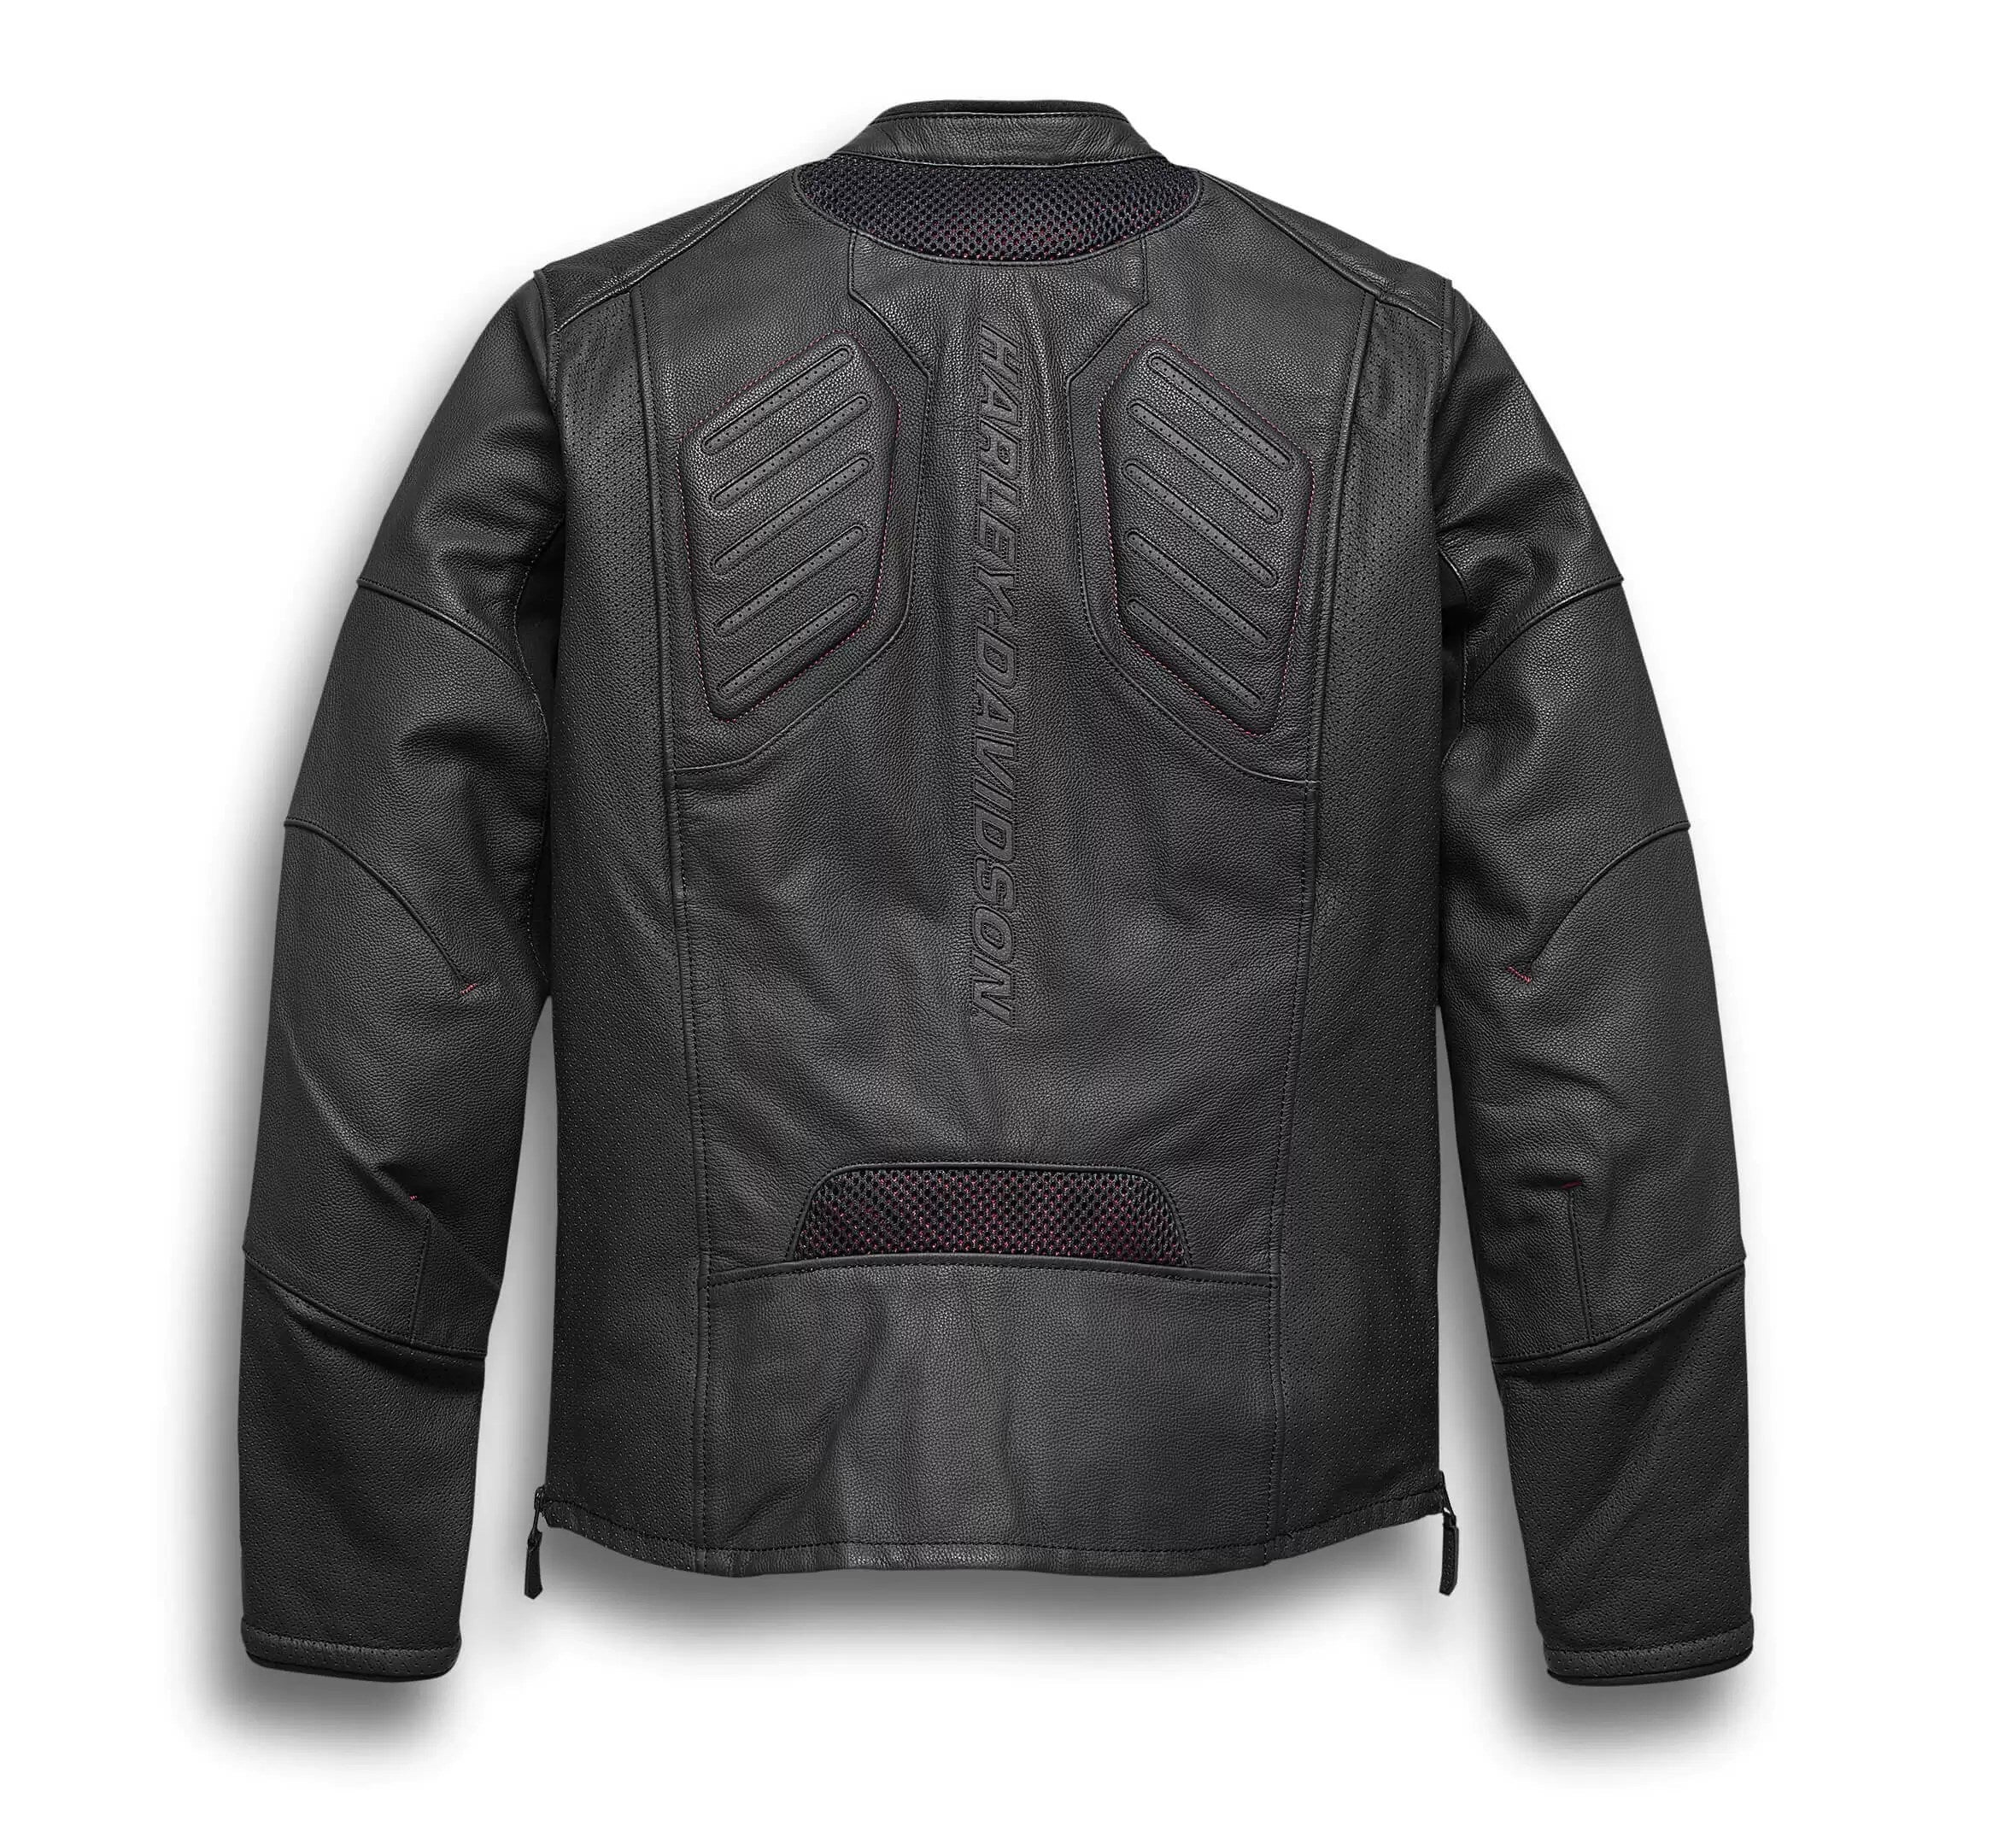 Harley Davidson Motorcycle Perforated Leather Jacket